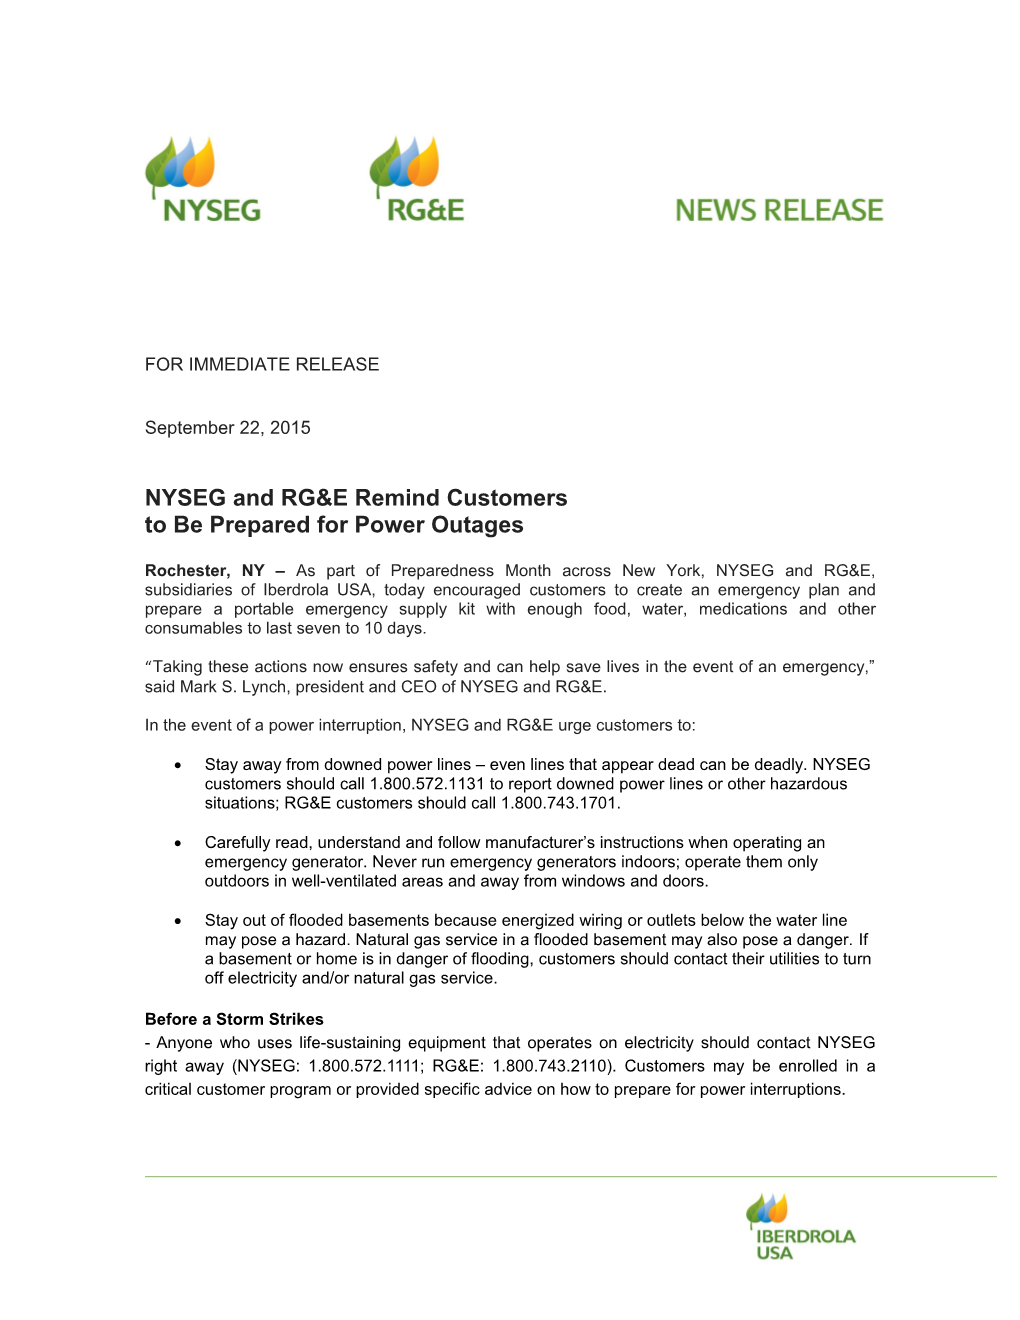 NYSEG and RG&E Remind Customers